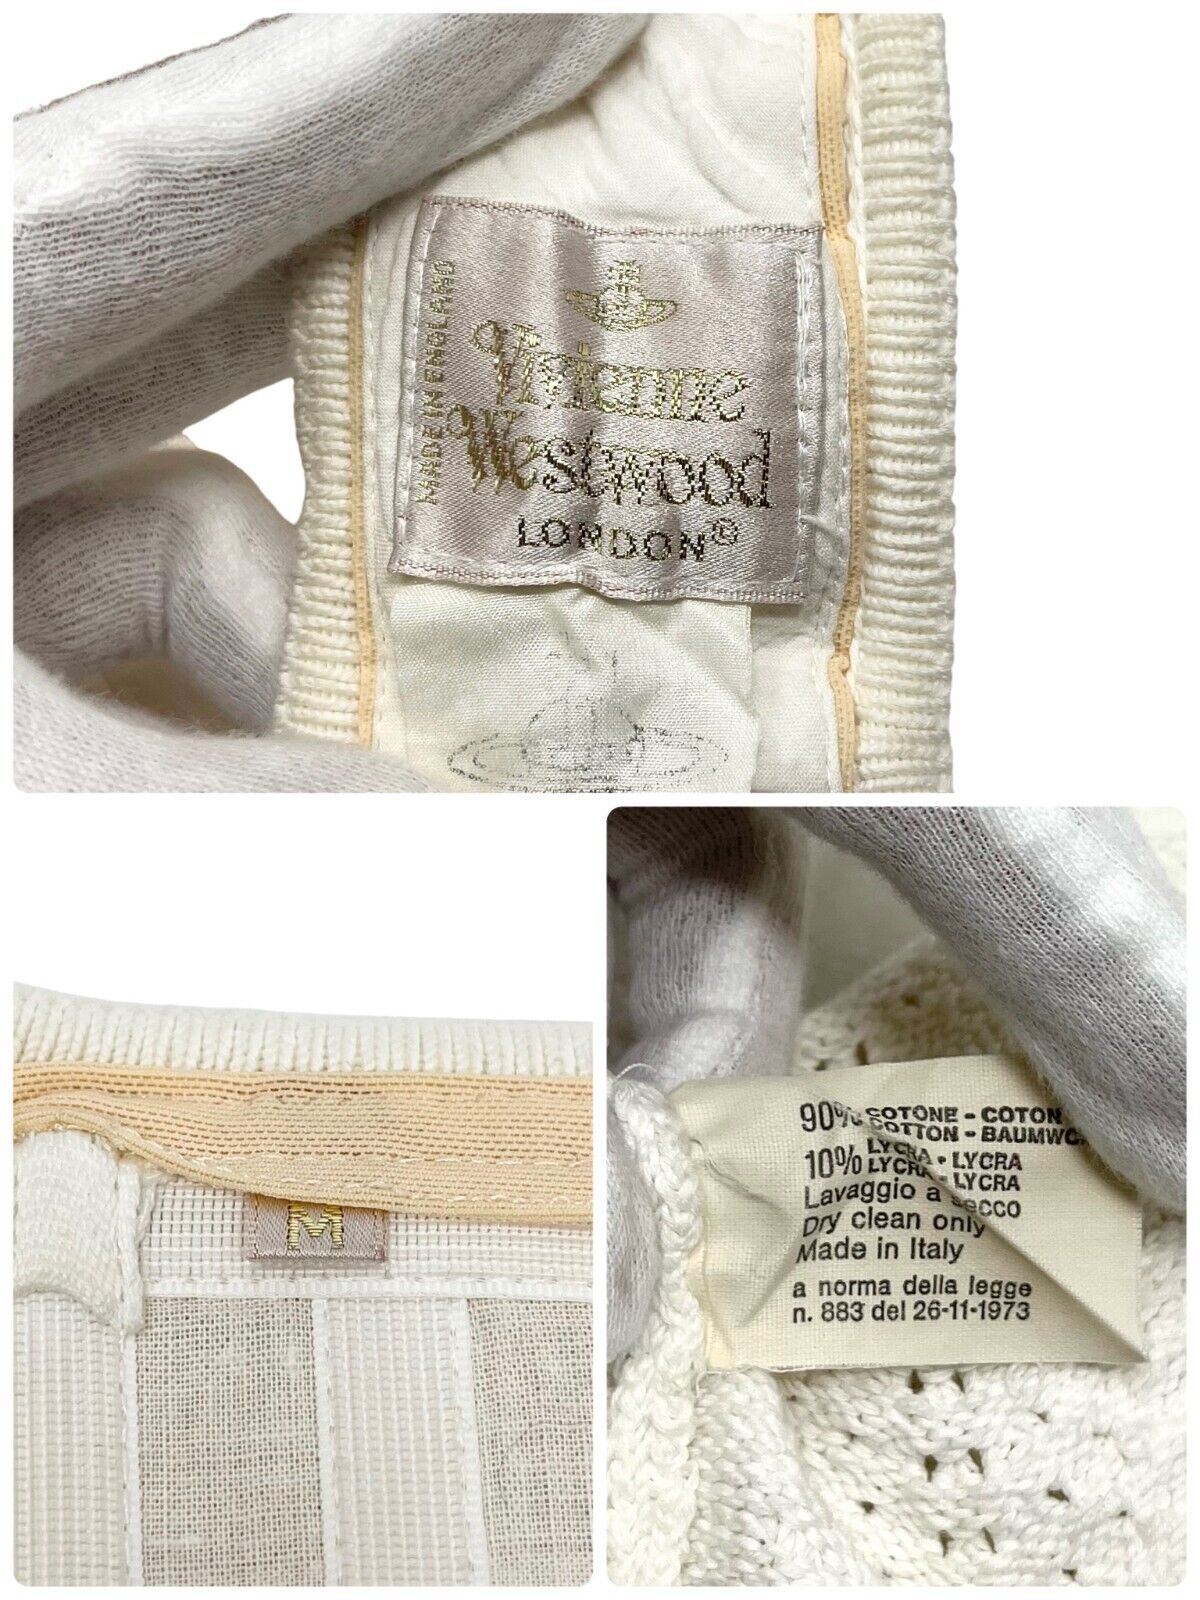 Vivienne Westwood Vintage Corset Bustier #M Knit Cotton Lycra White RankAB